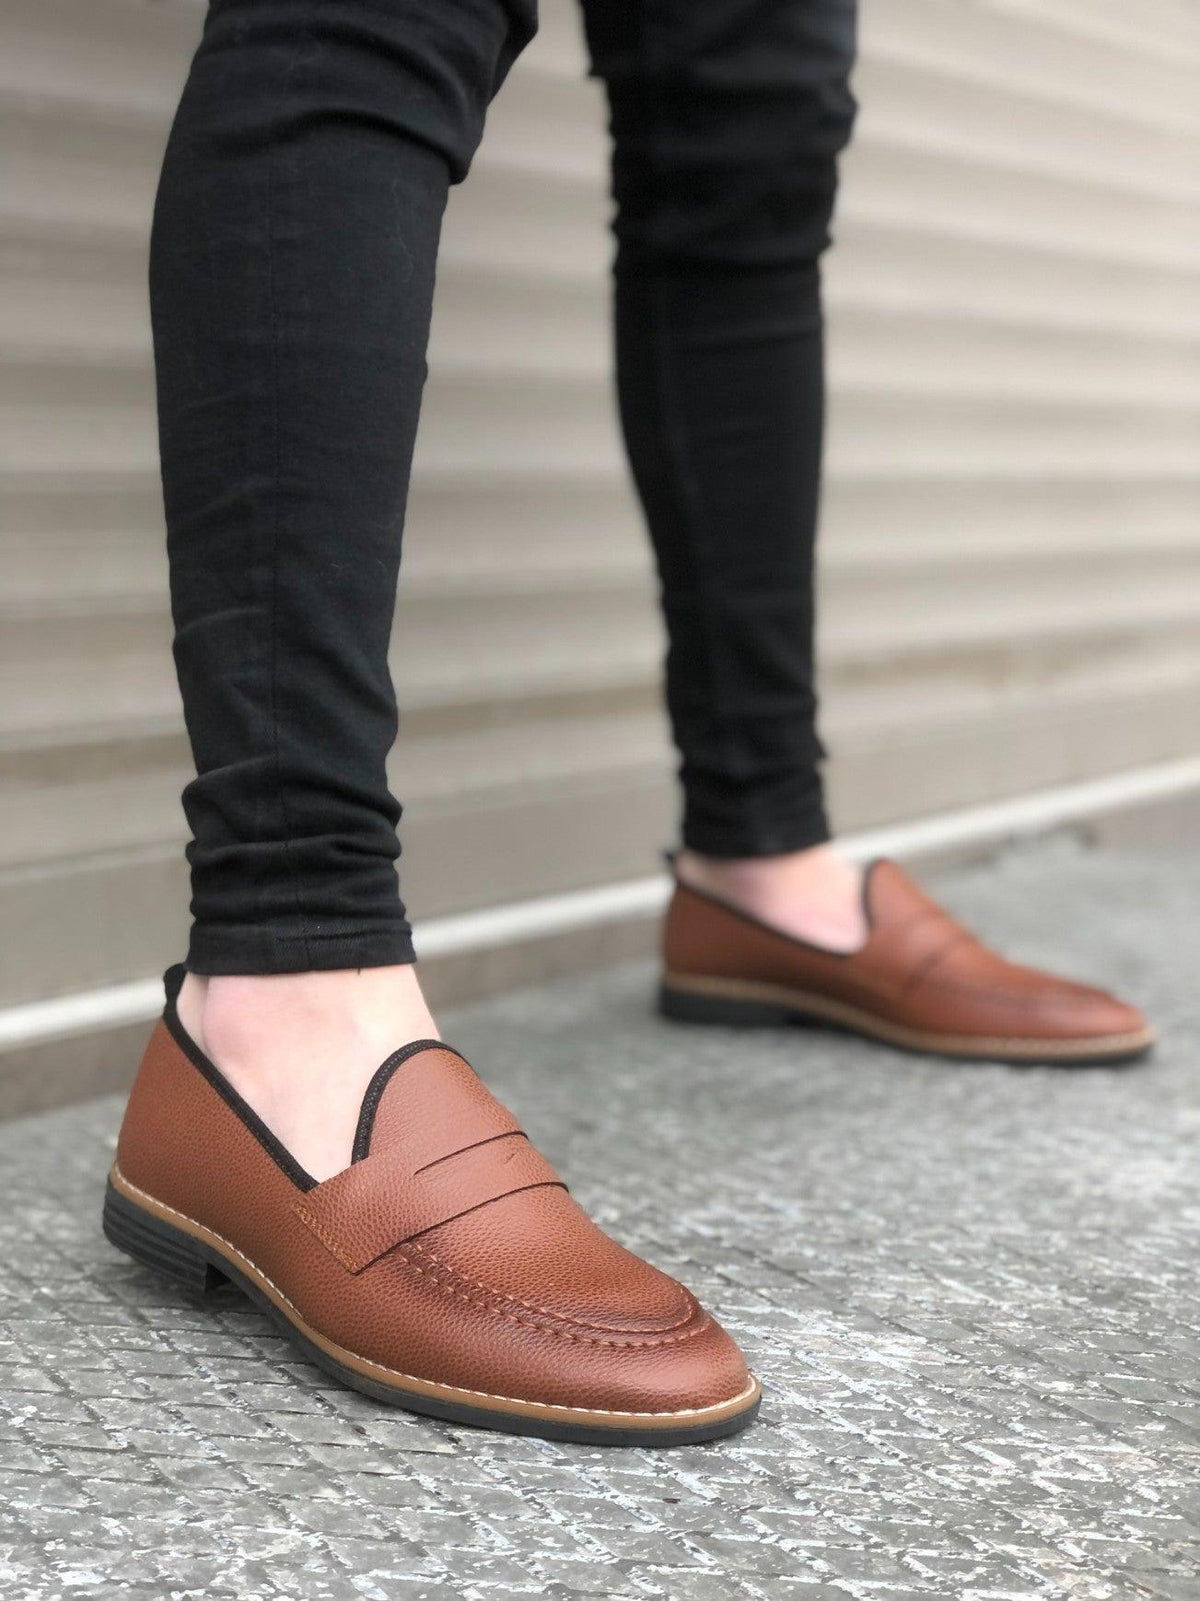 BA0009 Corcik Tan Leather Classic Men's Shoes - STREET MODE ™